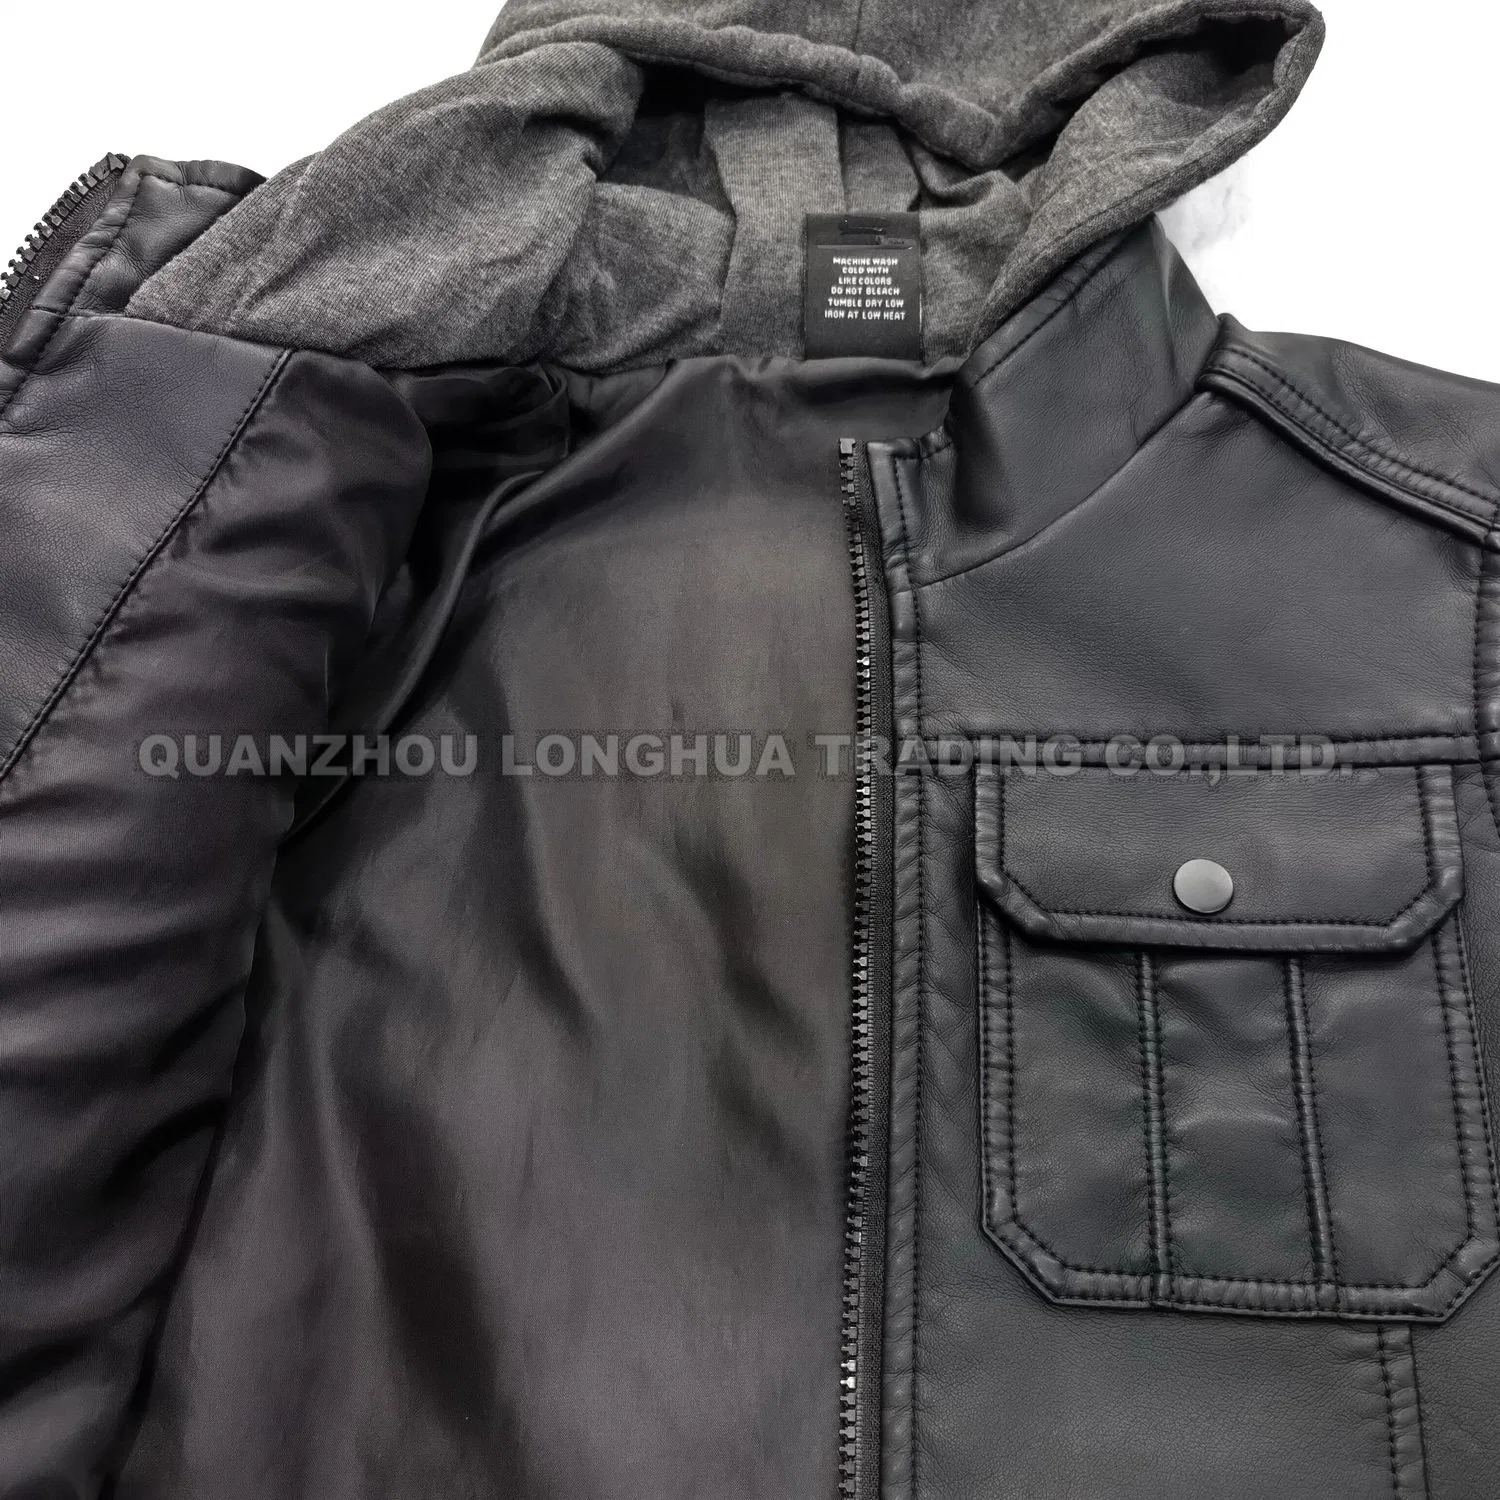 Herren Jacke Jungen Lederjacke Winter Mantel Schwarz PU-Bekleidung Mode Kleidung Kapuzenbekleidung